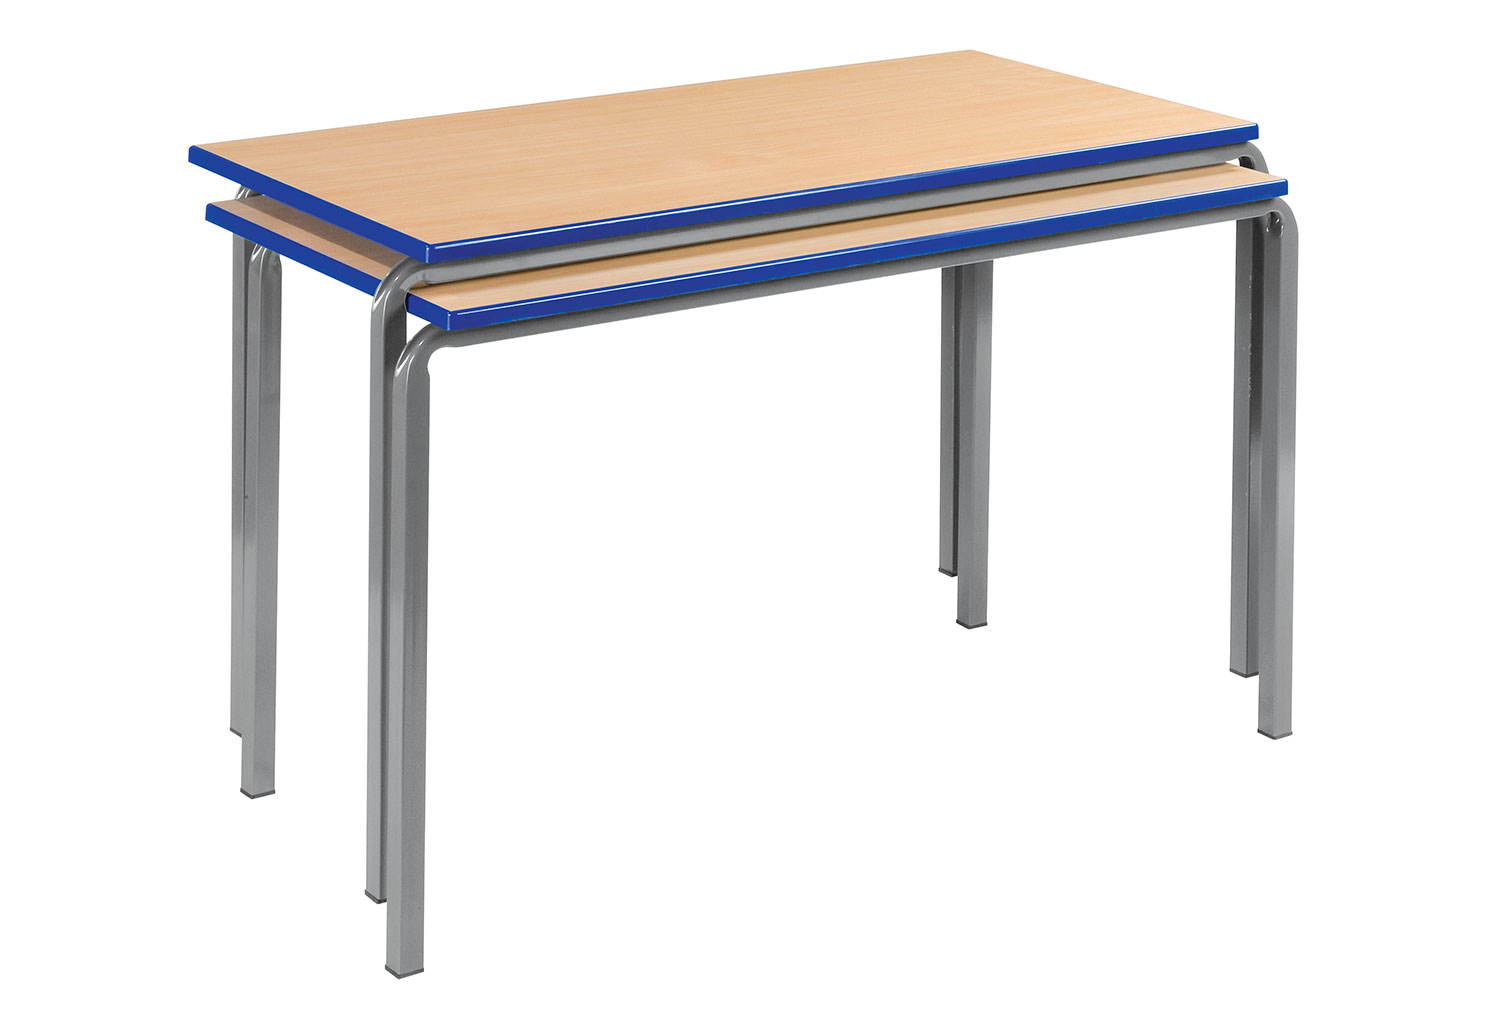 Qty 4 - Reliance Rectangular Classroom Tables 14+ Years, 110wx55dx76h (cm), Black Frame, Grey Top, PU Blue Edge